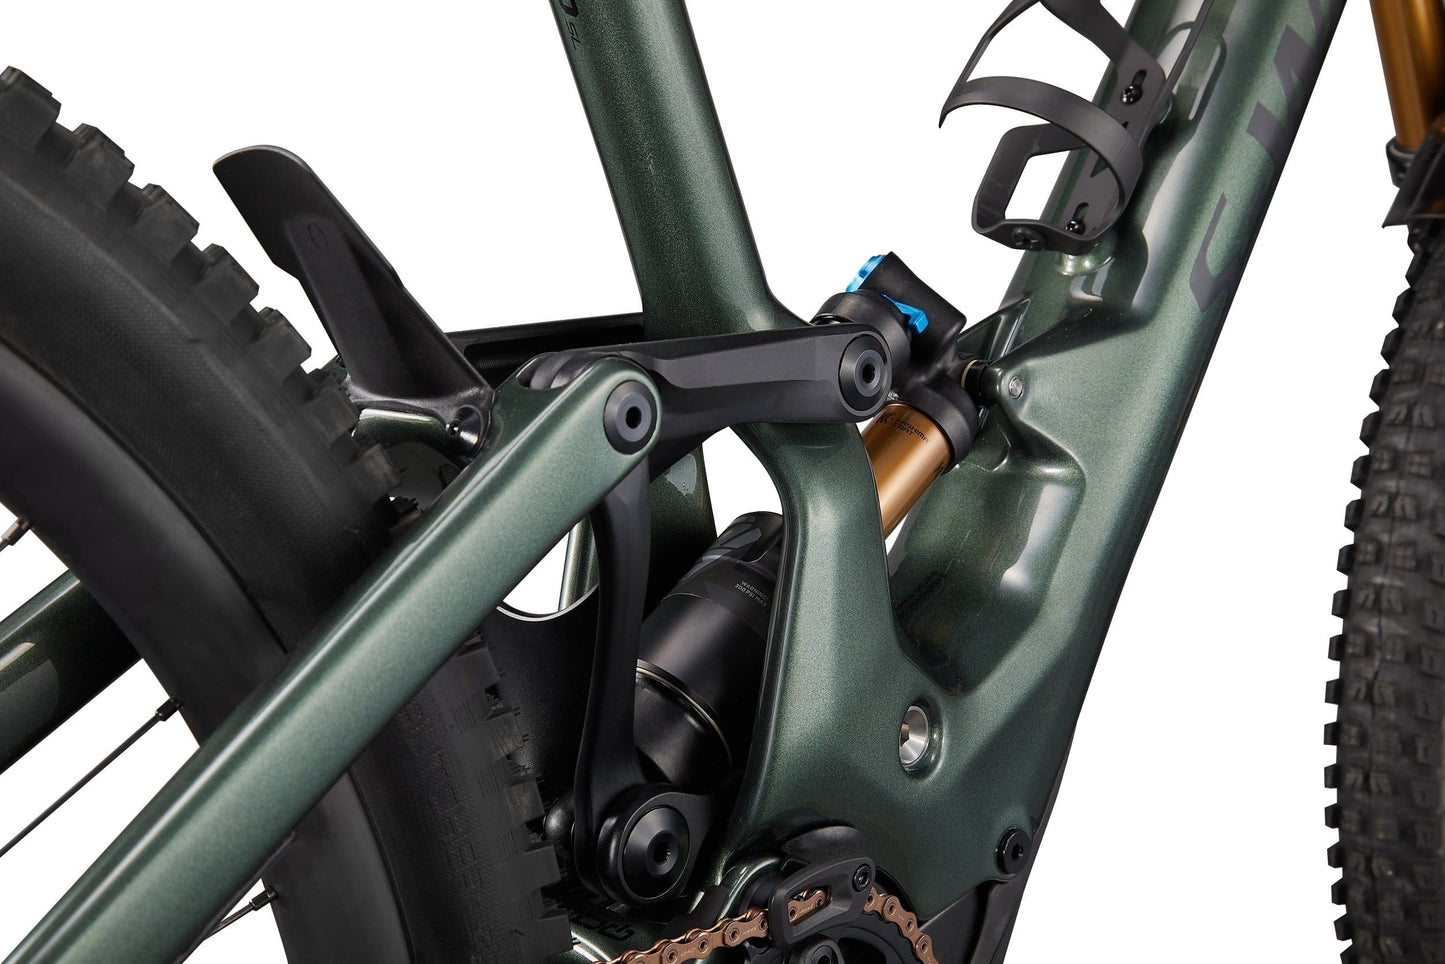 Specialized S-Works Turbo Kenevo SL gloss oak green metallic satin black emtb D6 link rear shock on Fly Rides